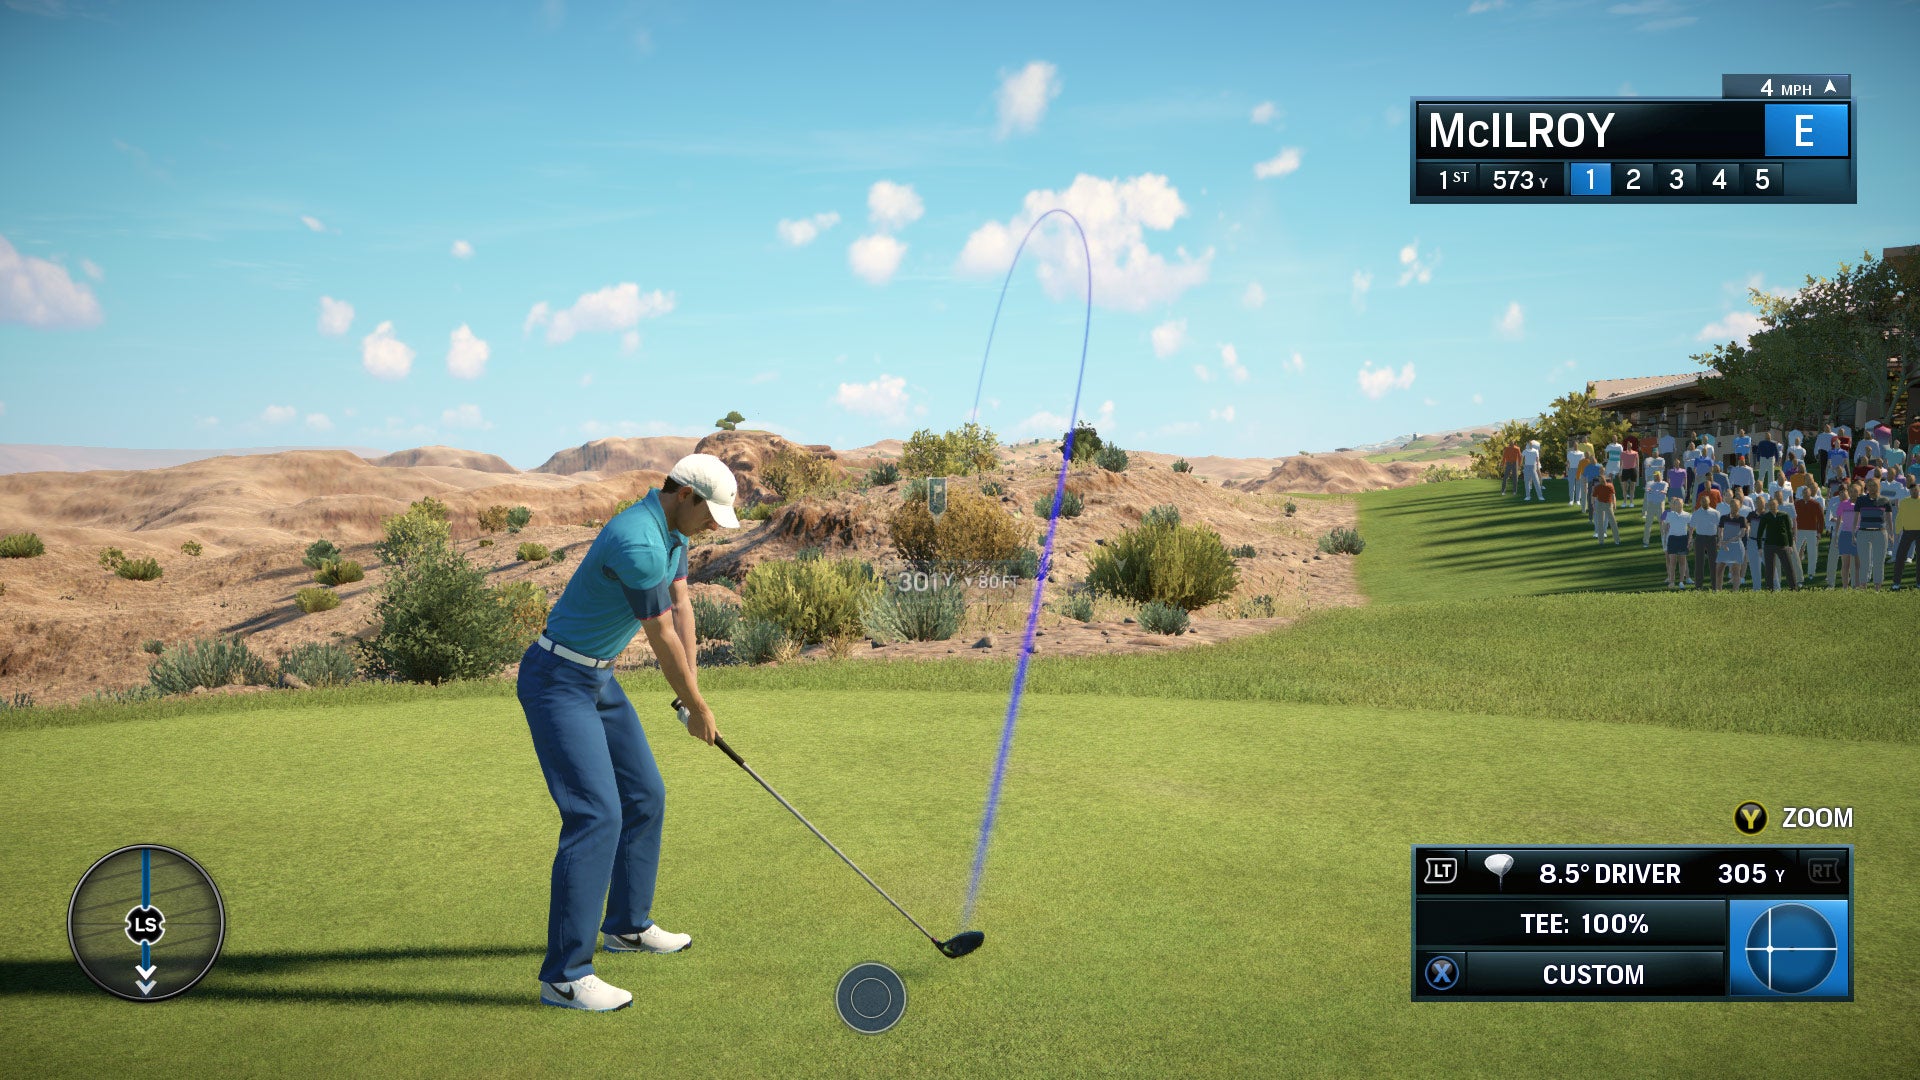 Rory McIlroy PGA Tour screenshot shows McIlroy ready to drive a ball